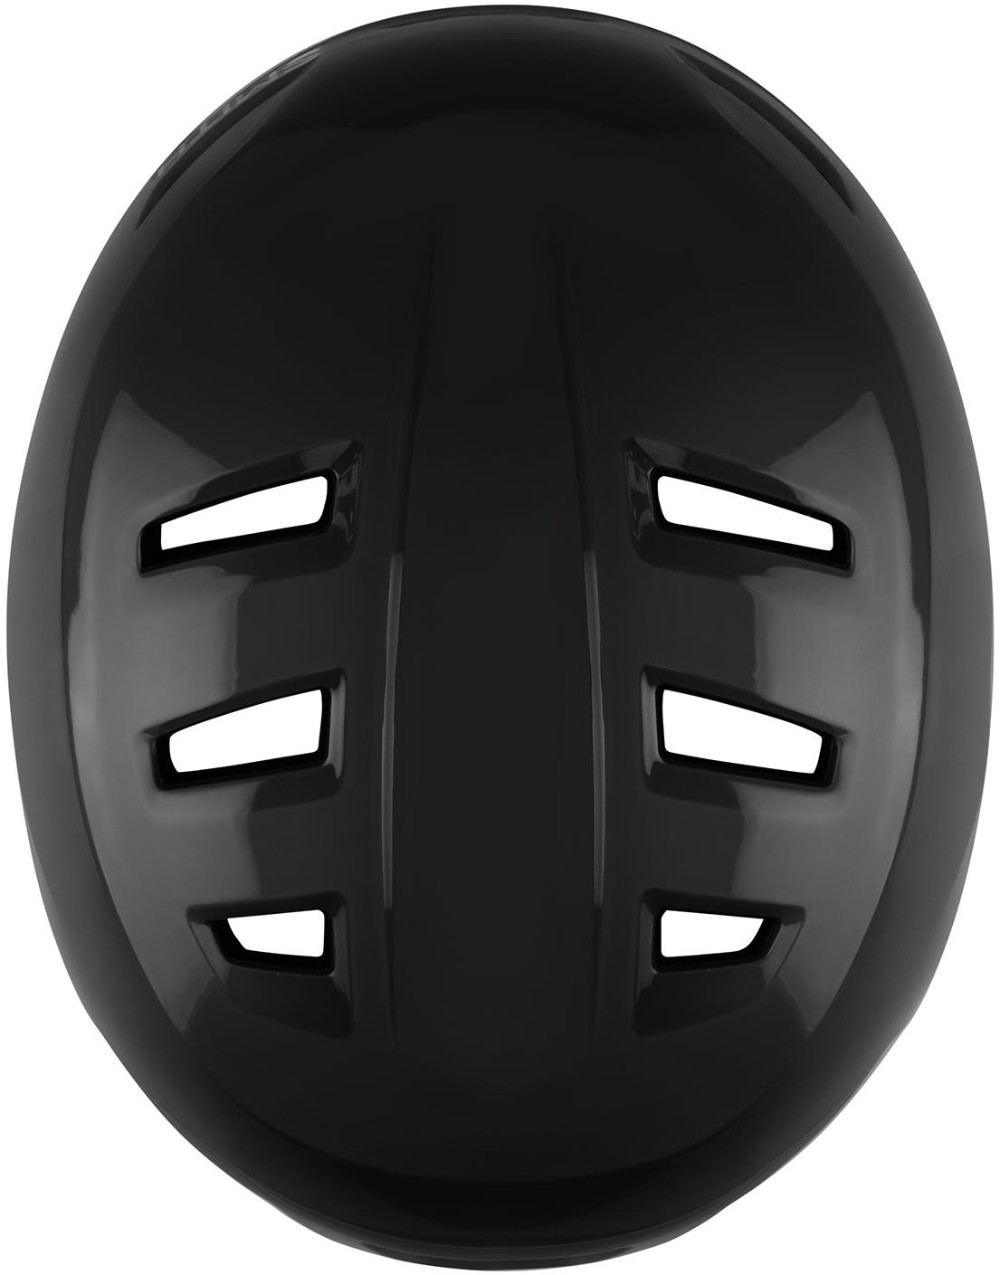 Express City Cycling Helmet image 1